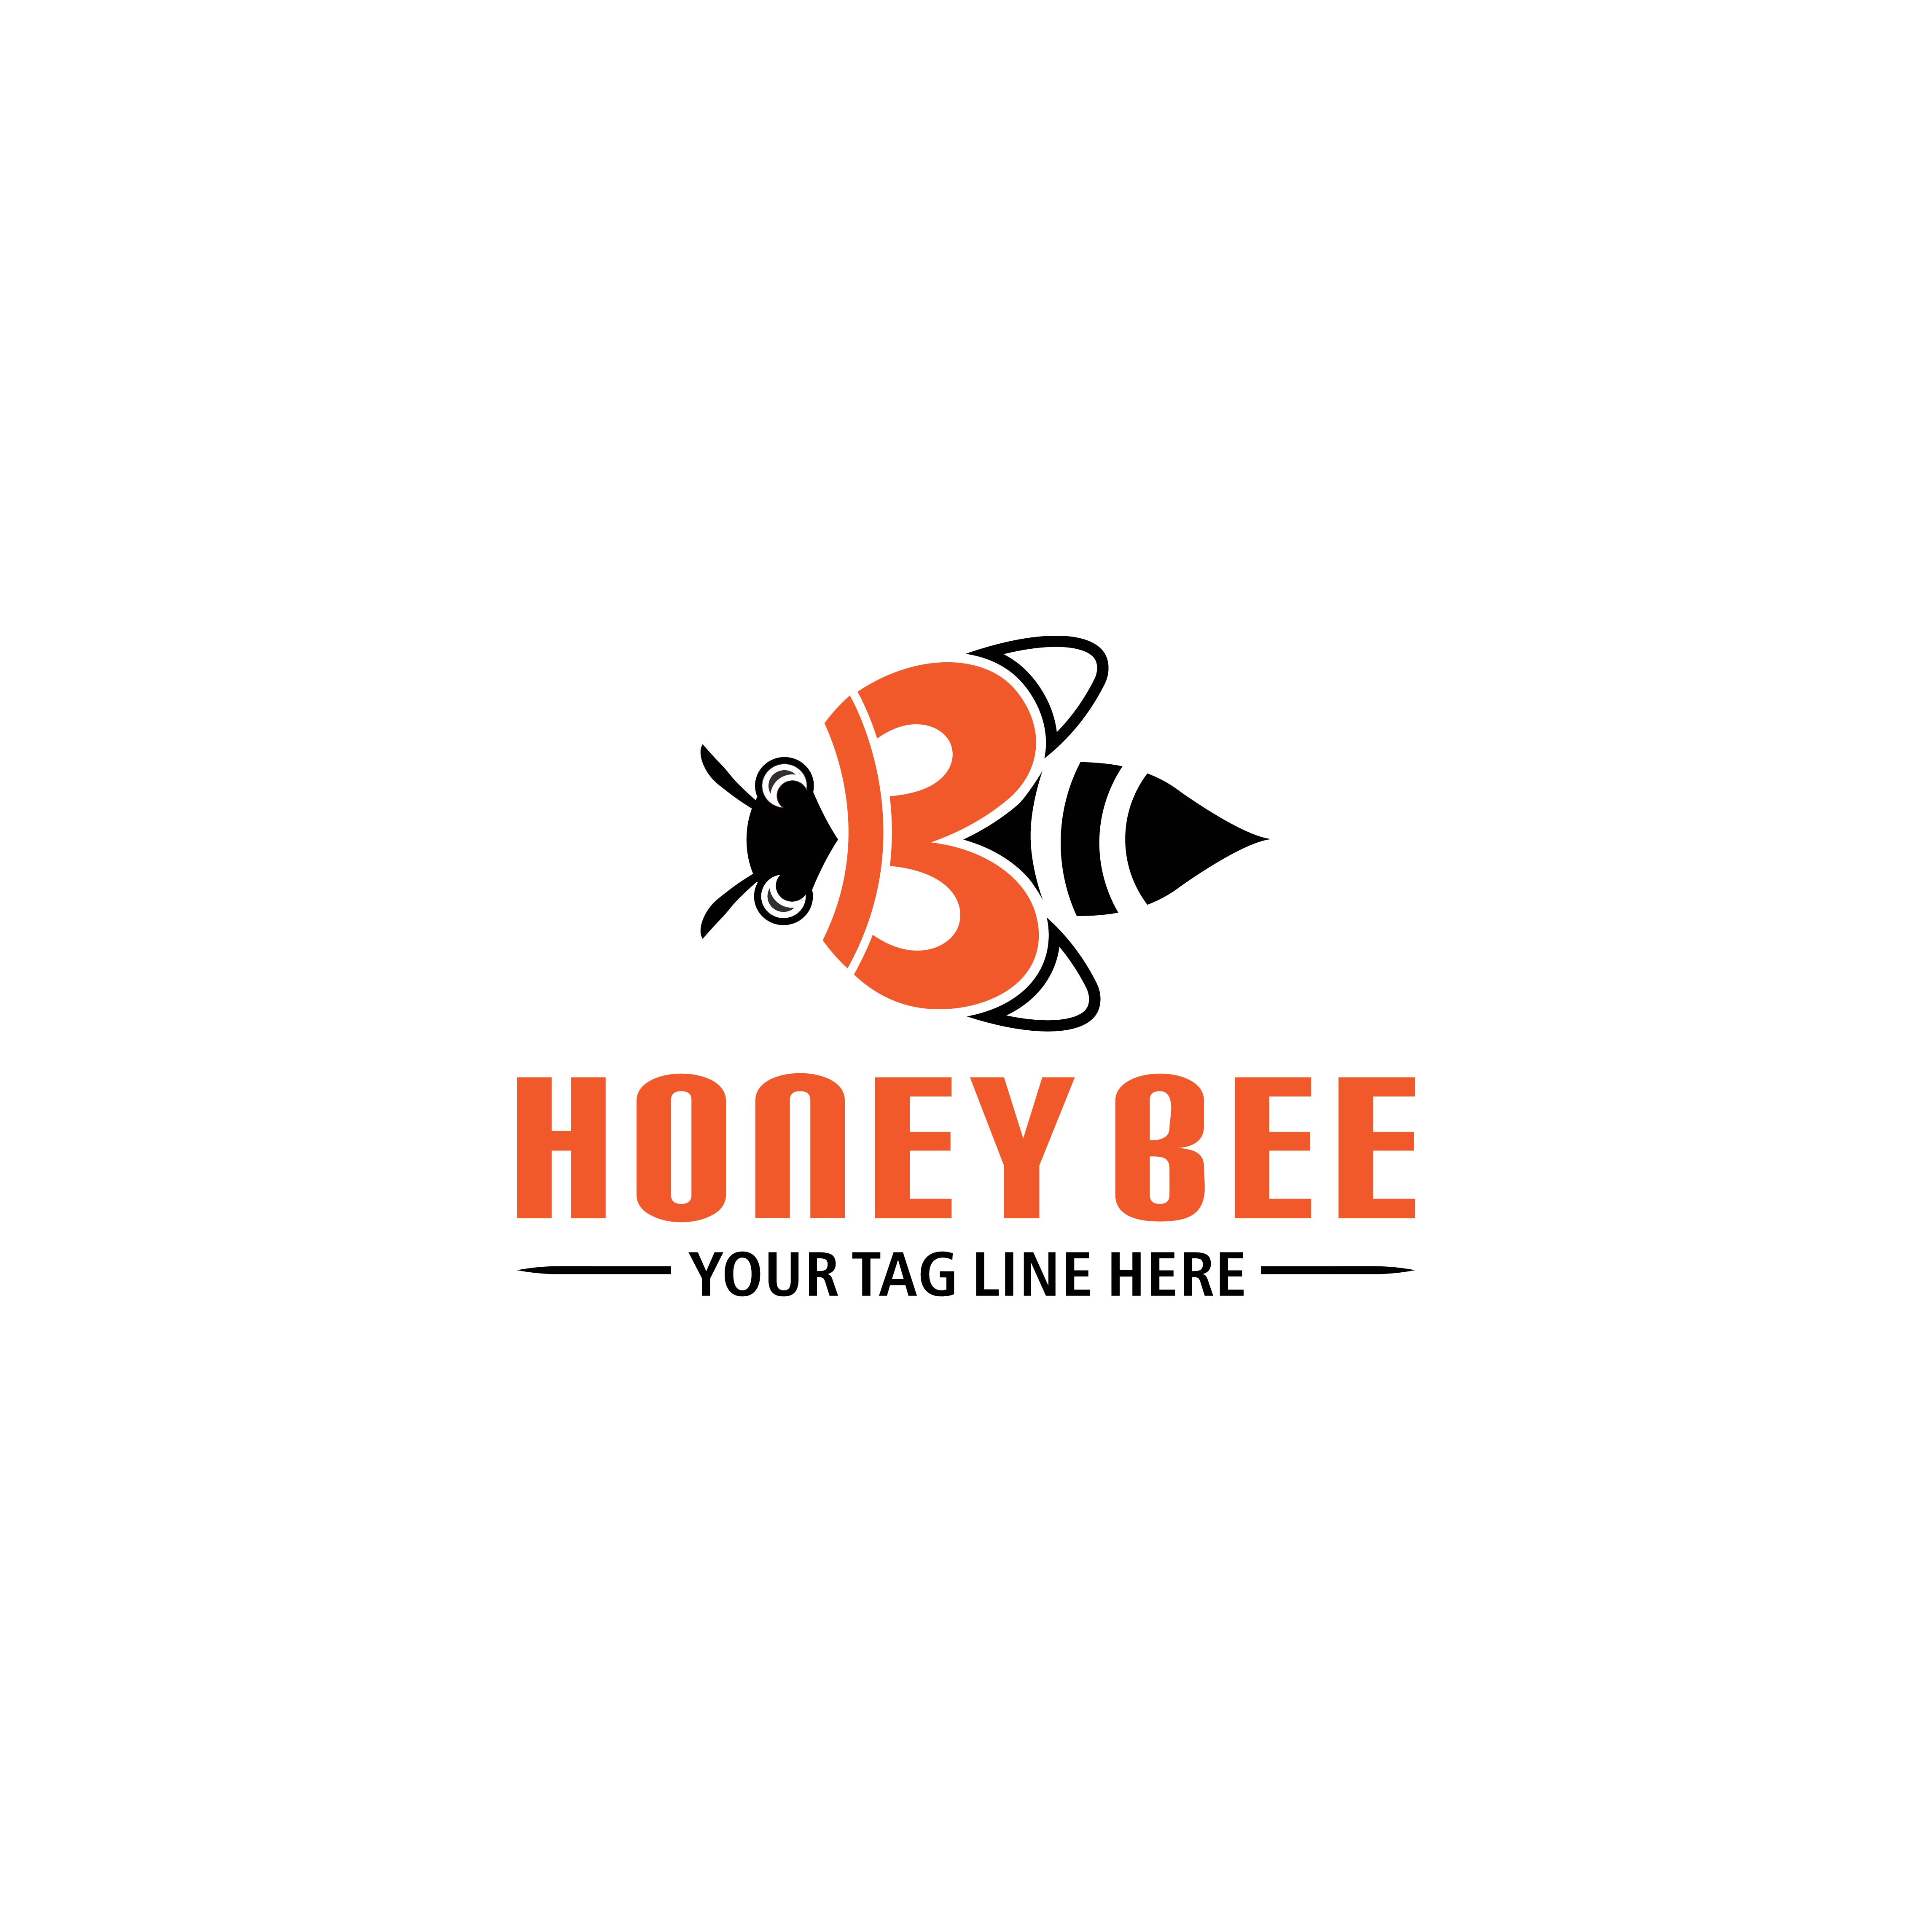 Huney Bee logo for Honey Company cover image.